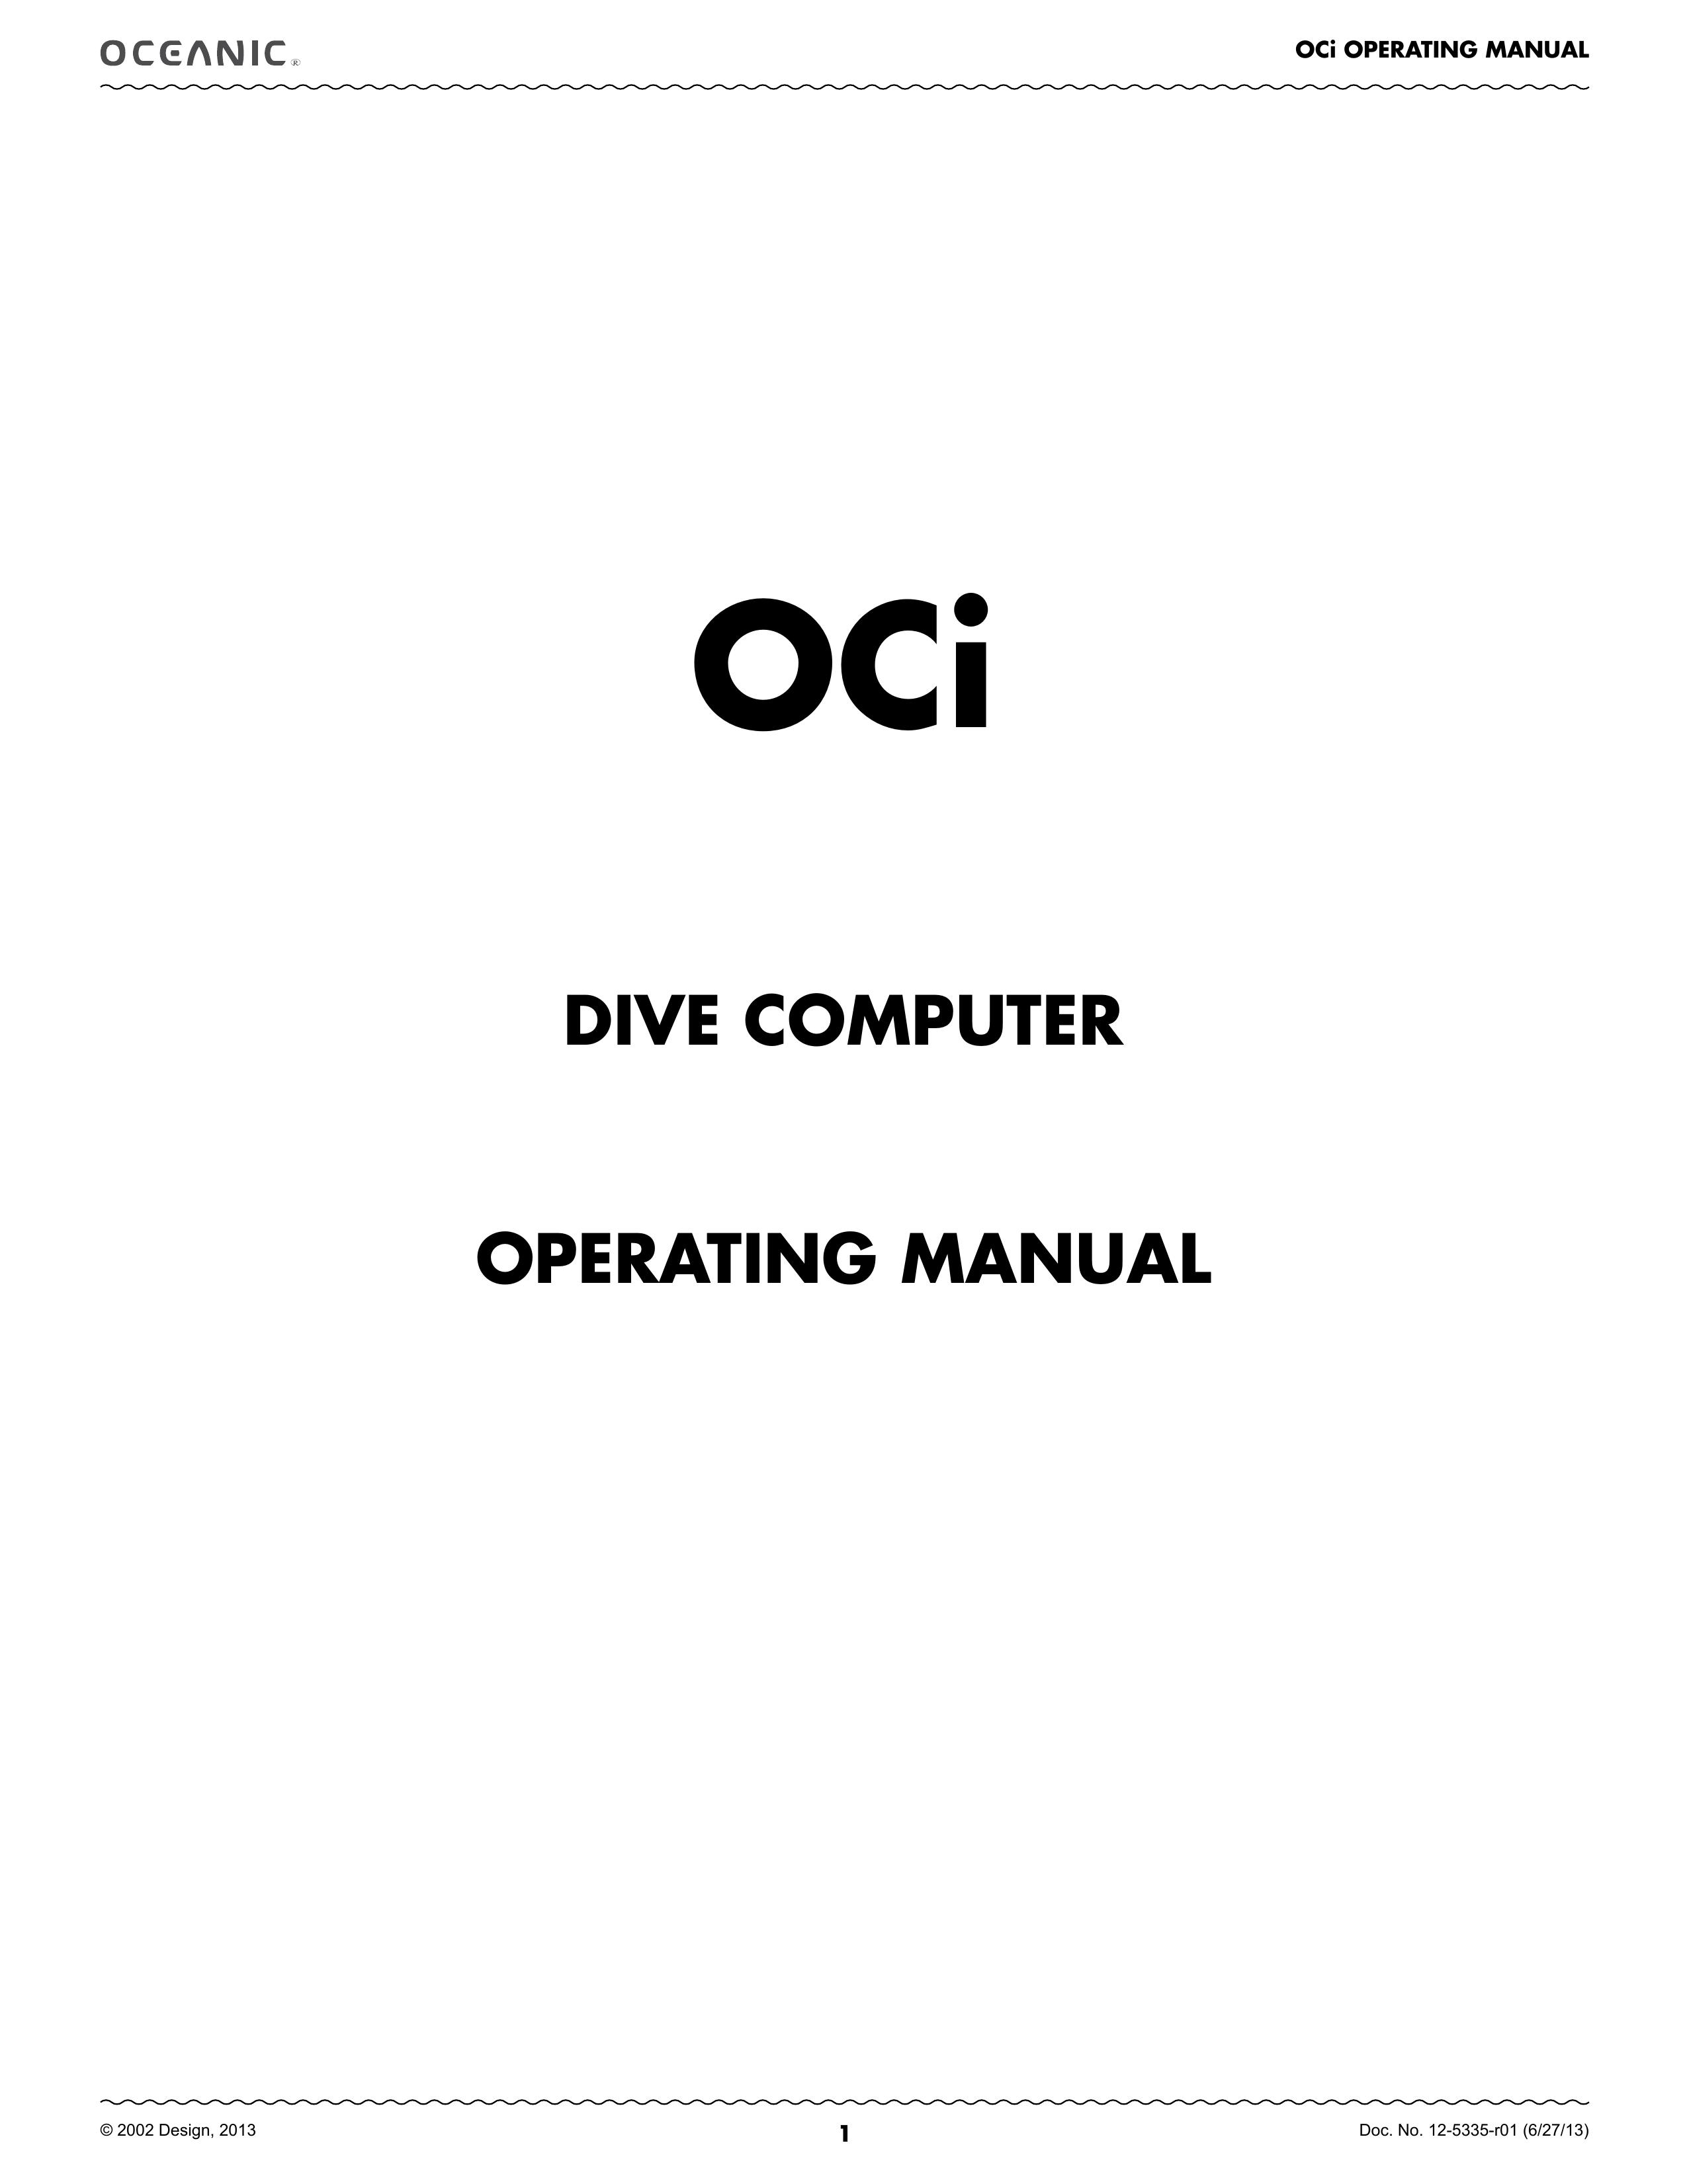 Oceanic 04-8792-49 Scuba Diving Equipment User Manual